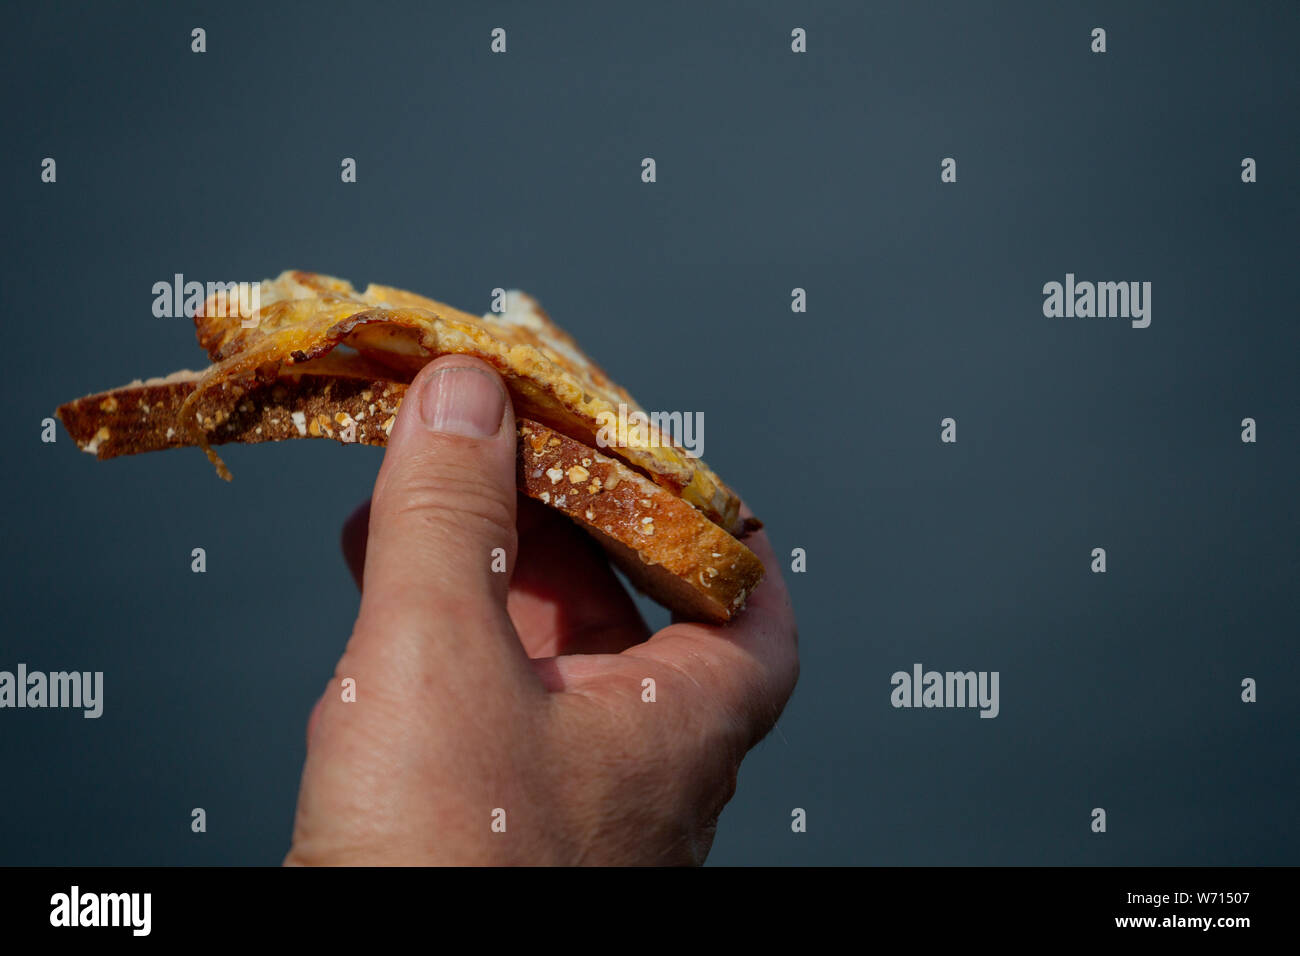 Hand holding an egg sandwich against the sky Stock Photo